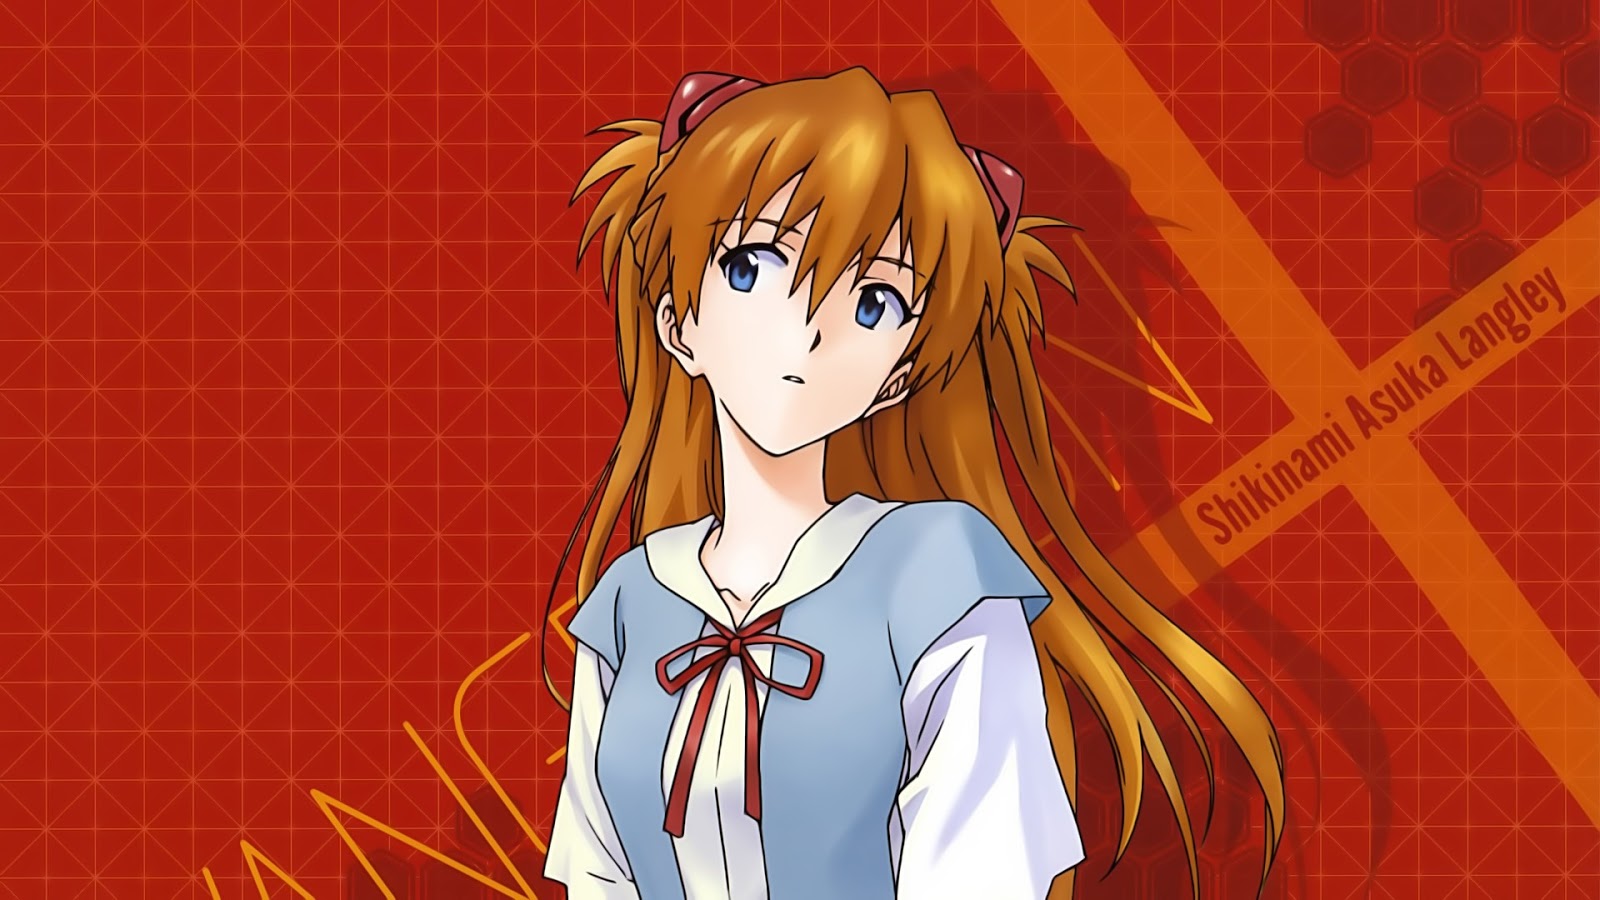 Berikut ialah Asuka Anime HD Wallpaper Pack yang dapat kalian download secara eksklusif Asuka Anime HD Wallpaper Pack